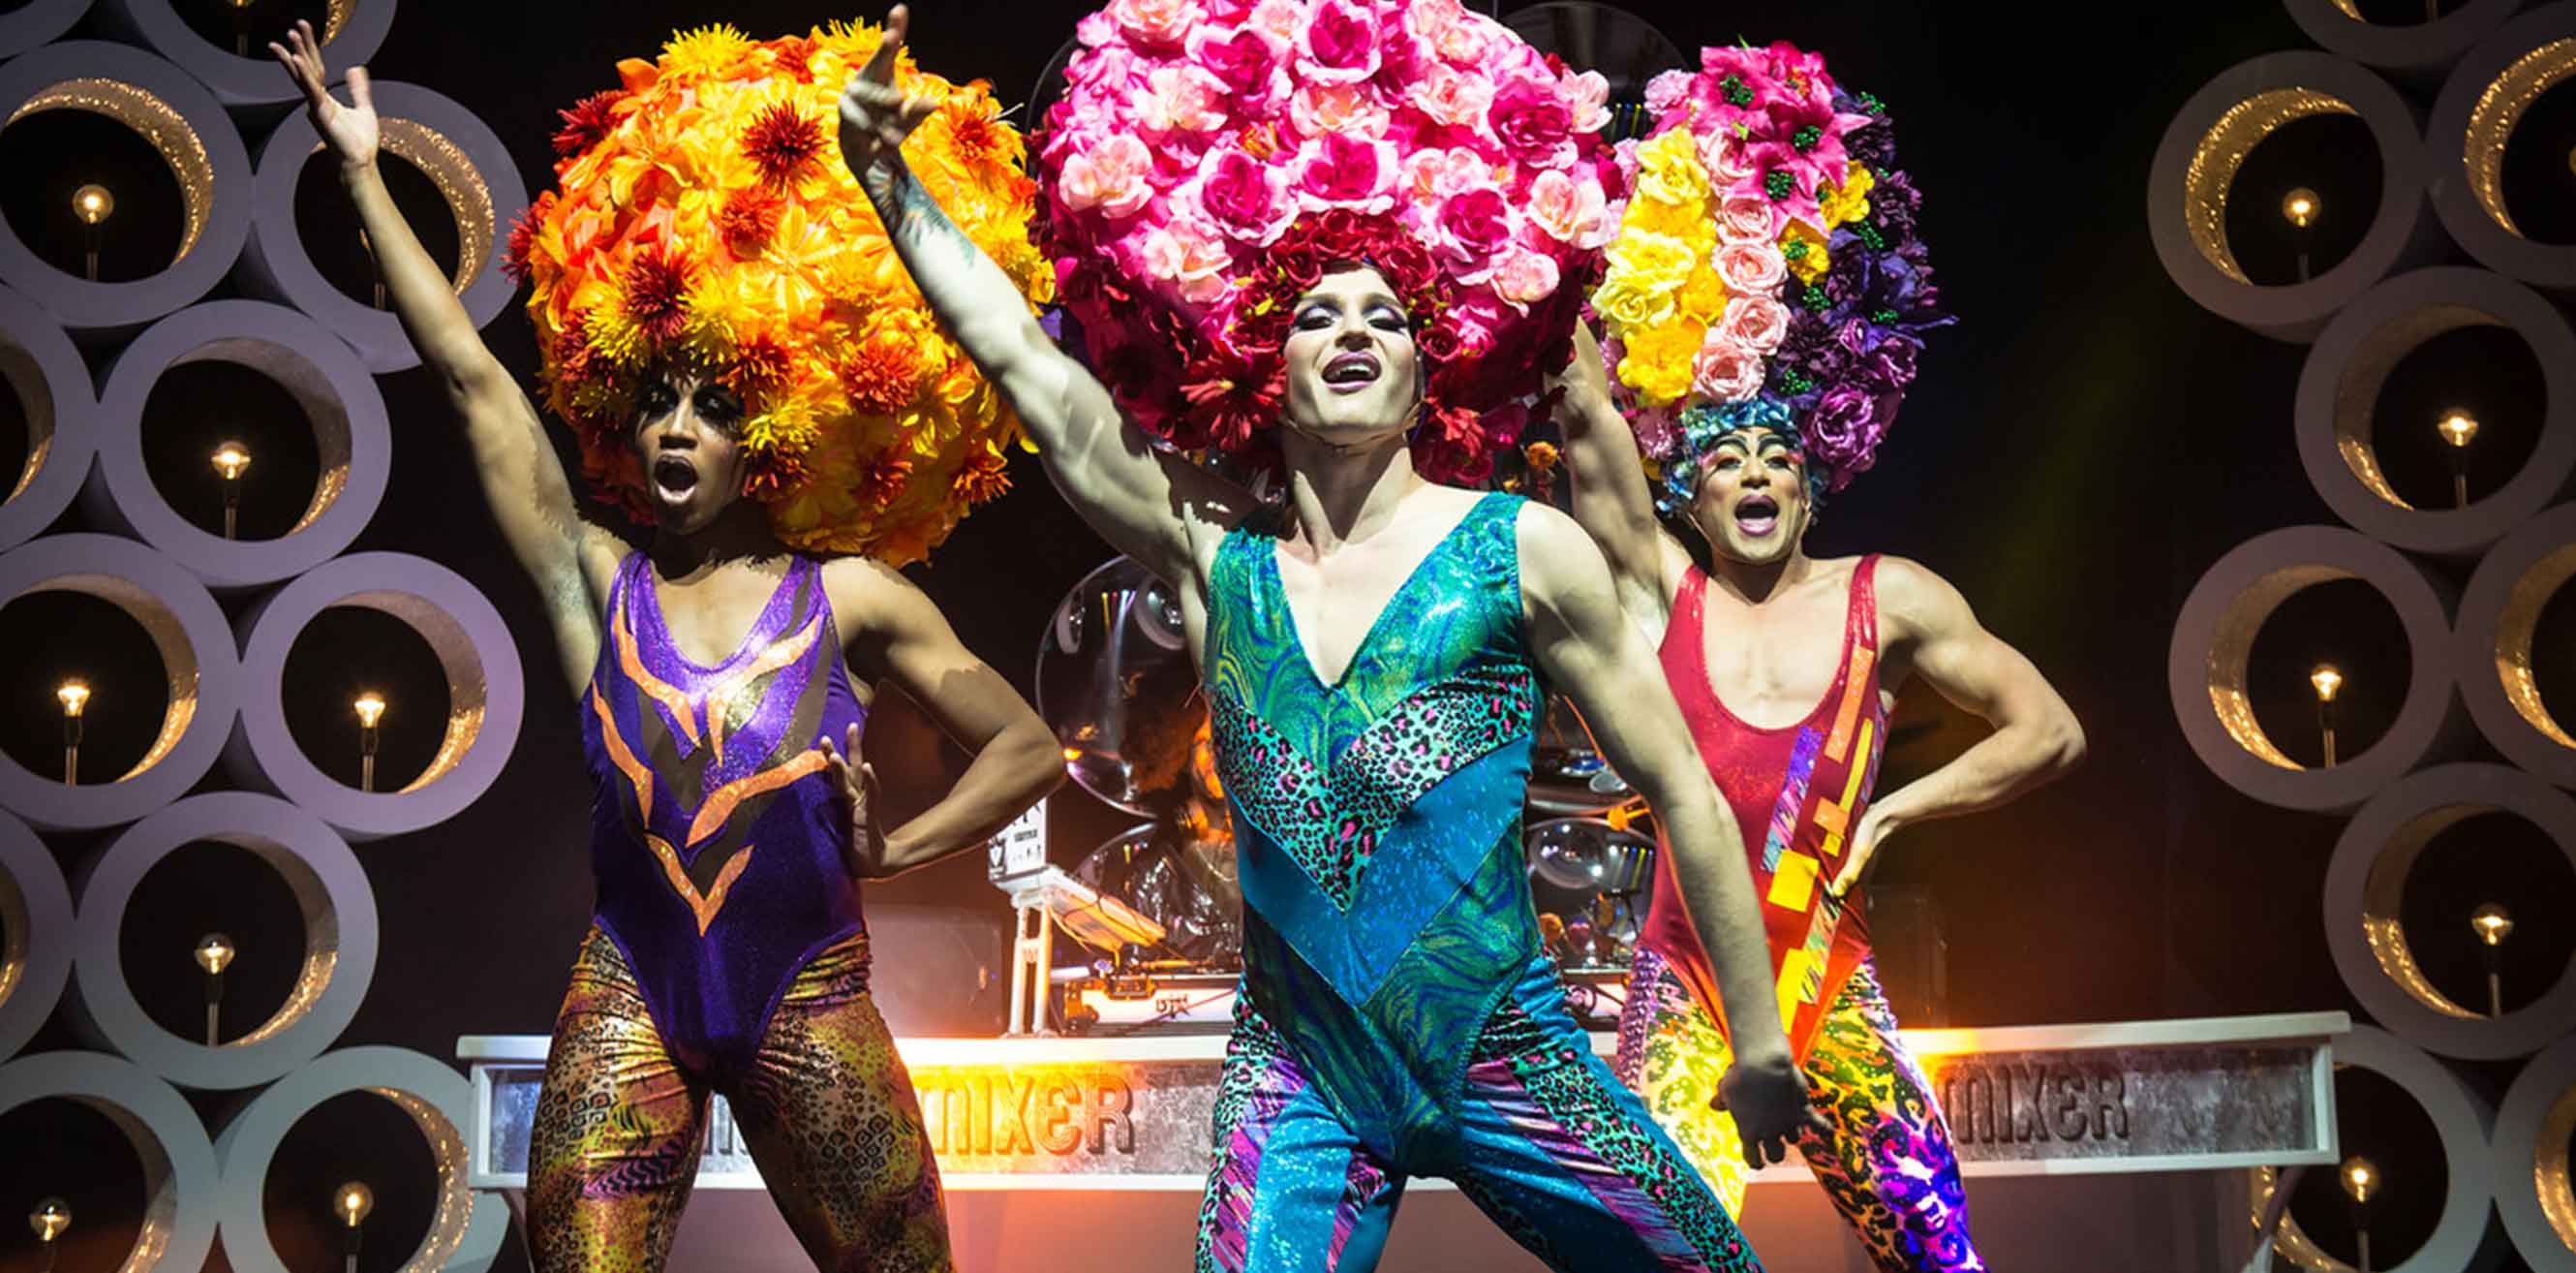 Drag performers wearing floral arrangement wigs